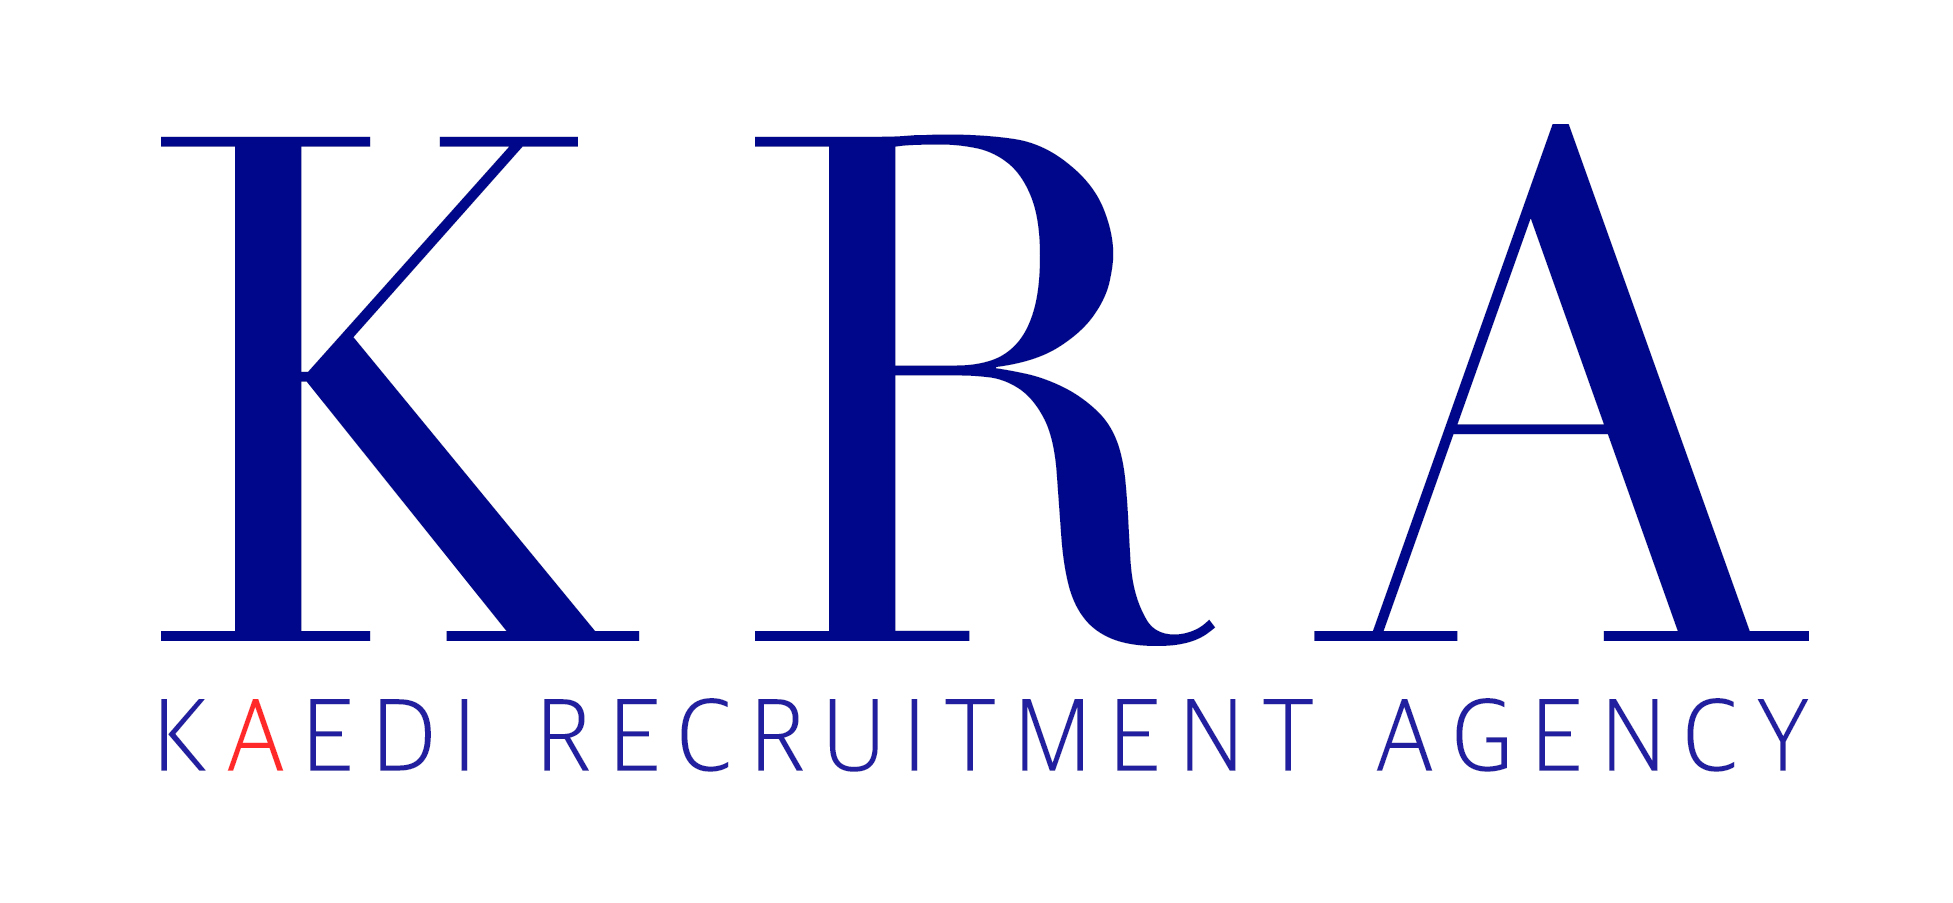 Kaedi Recruitment Agency